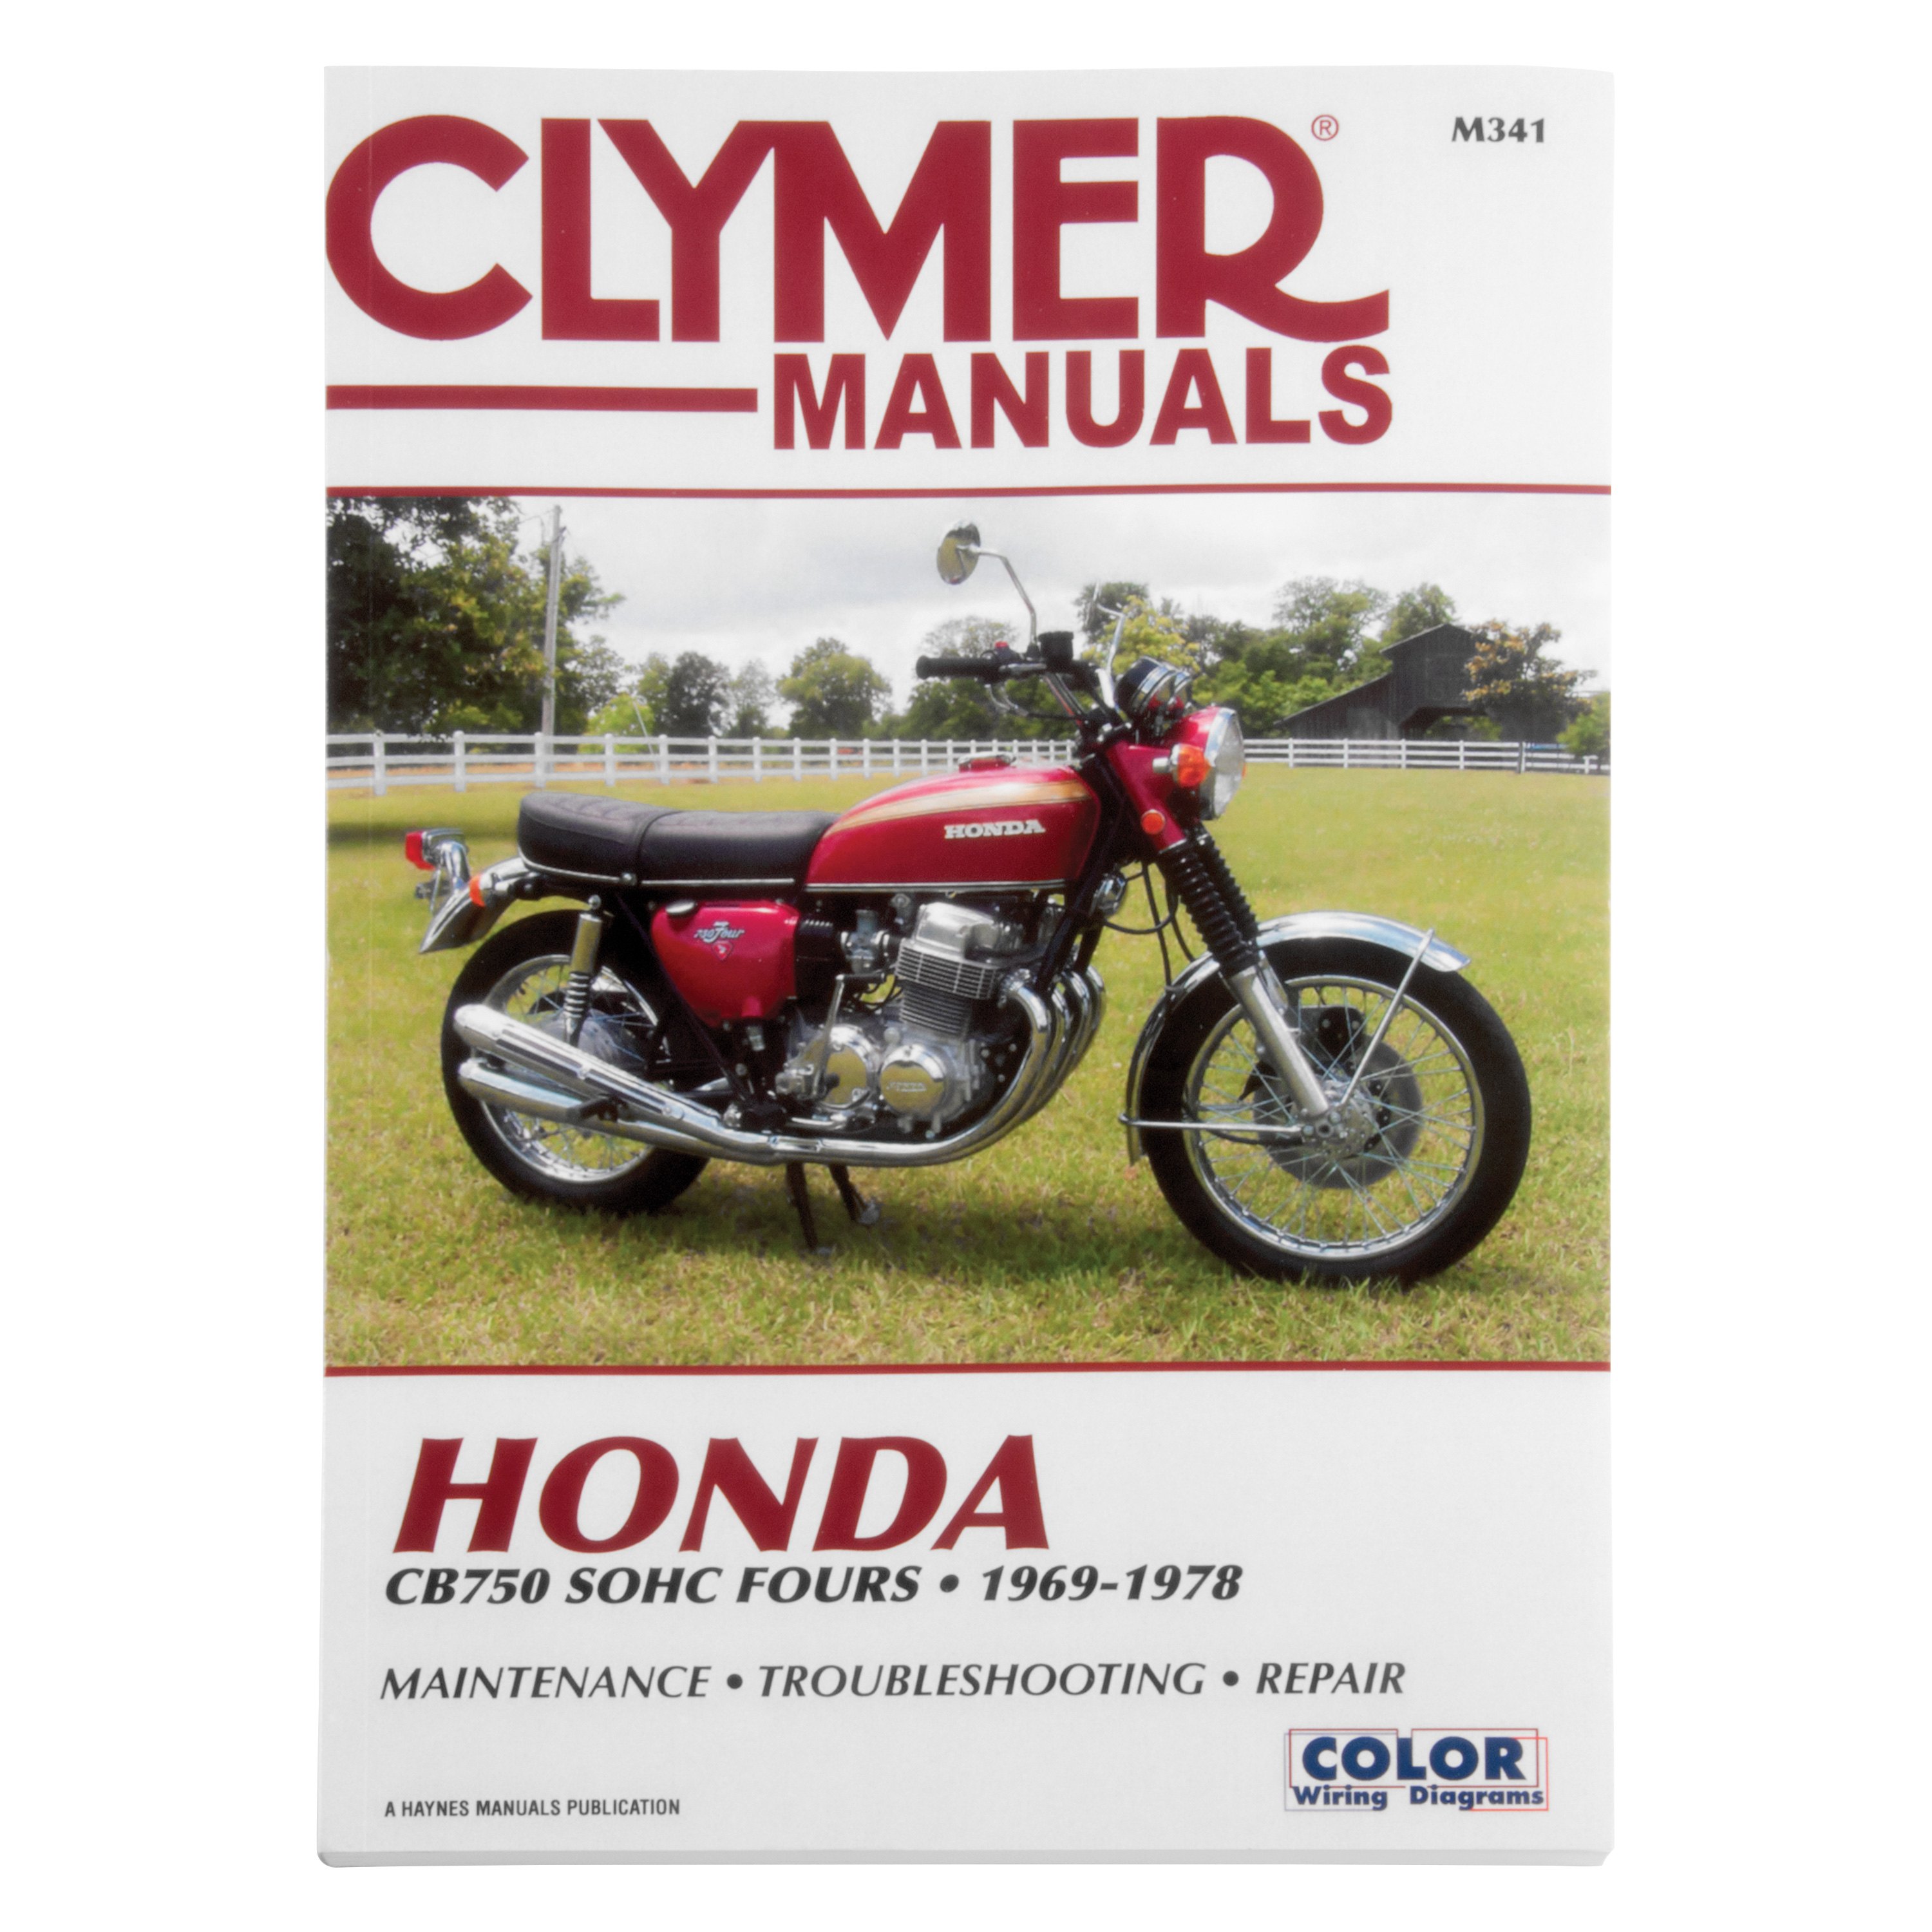 1969-1978 Honda CB750 SOHC Fours Clymer Service Repair Maintenance Manual M341